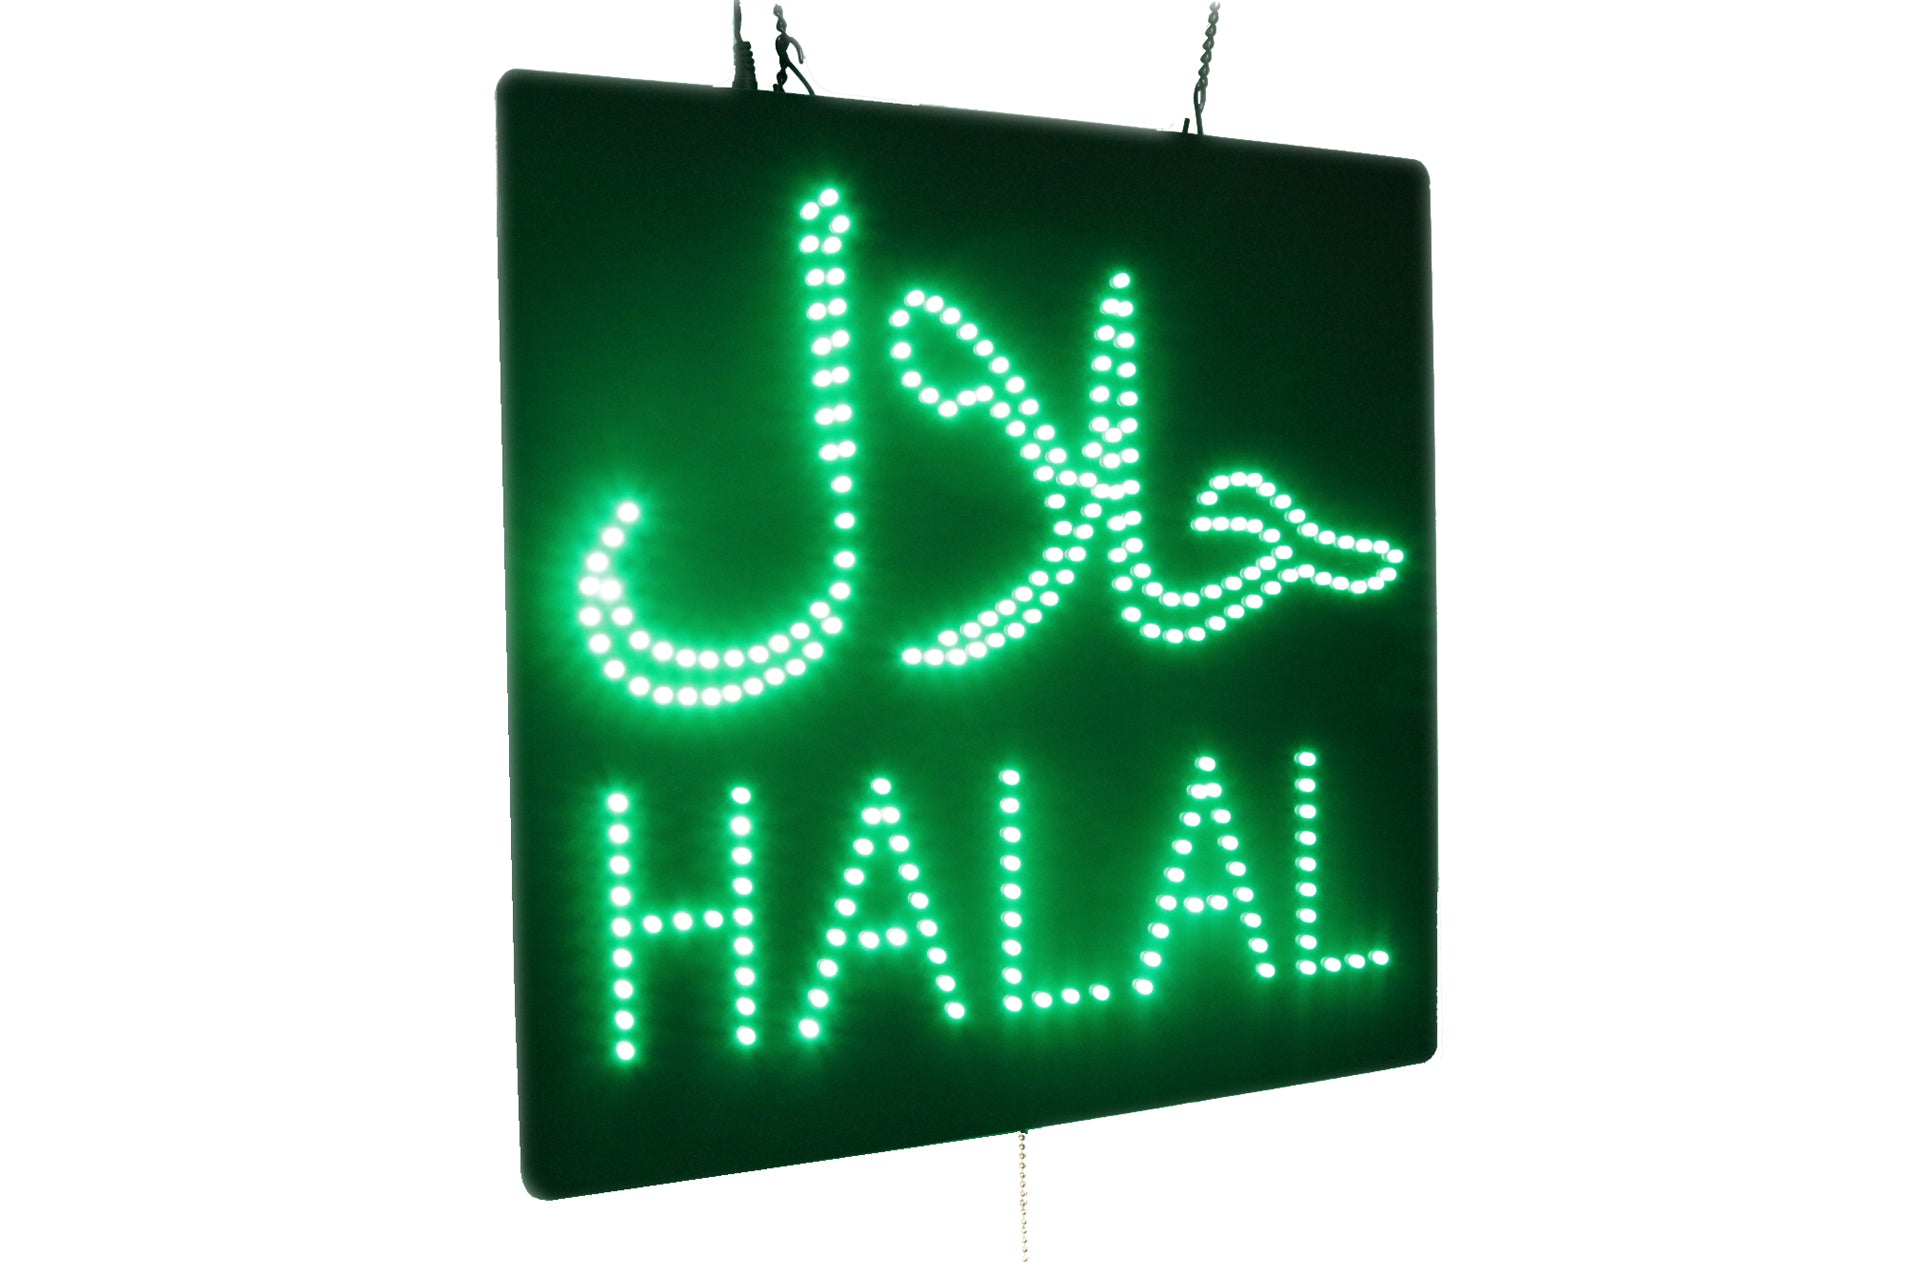 Halal in Arabic and English